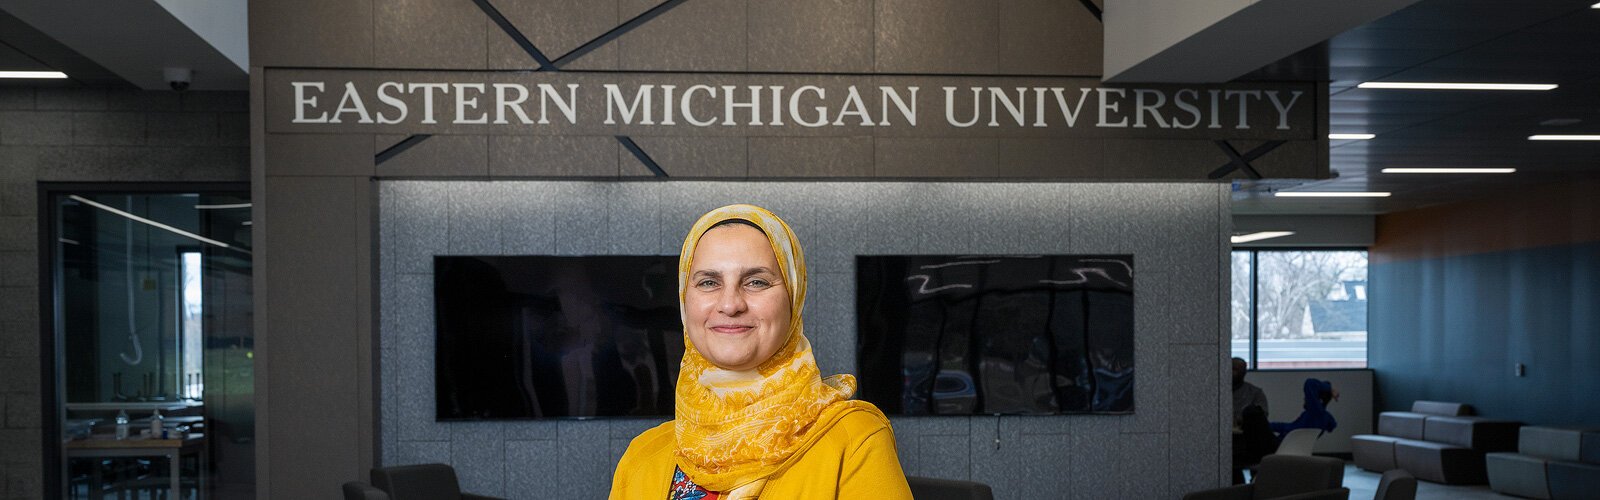 Eastern Michigan University's Digital Divas program director Bia Hamed.